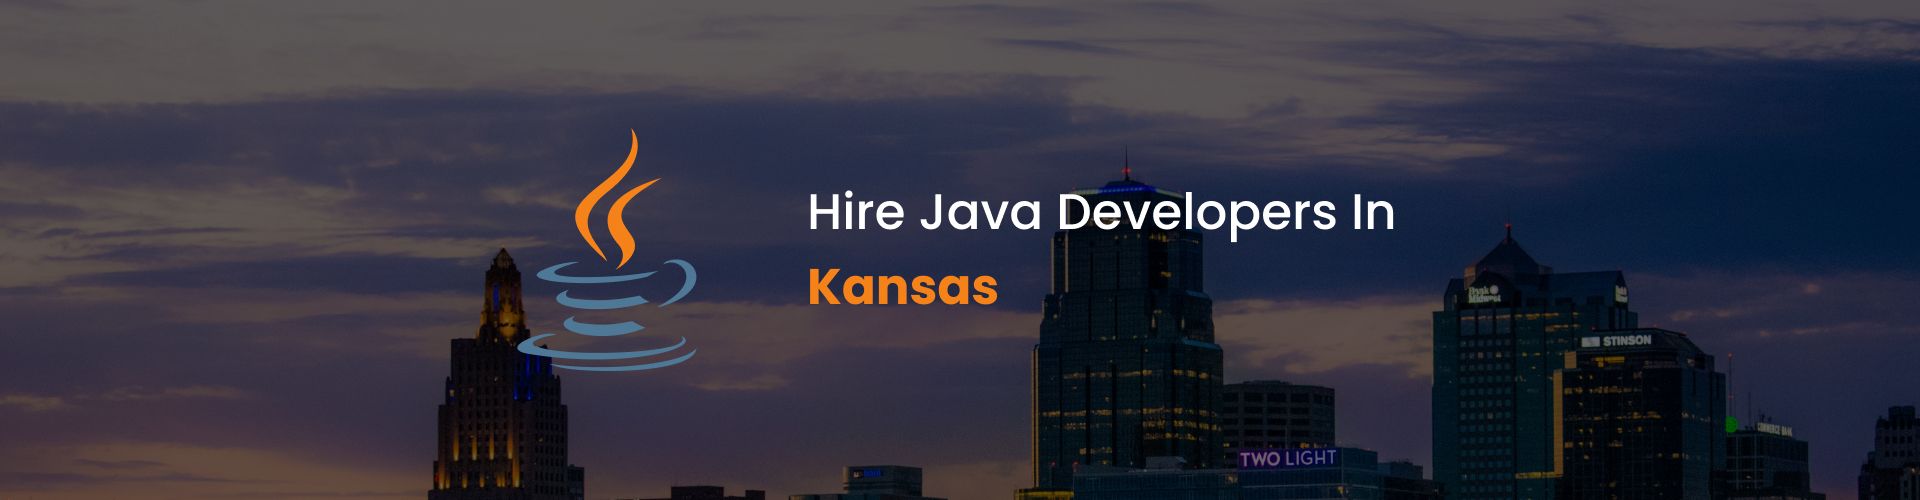 hire java developers in kansas